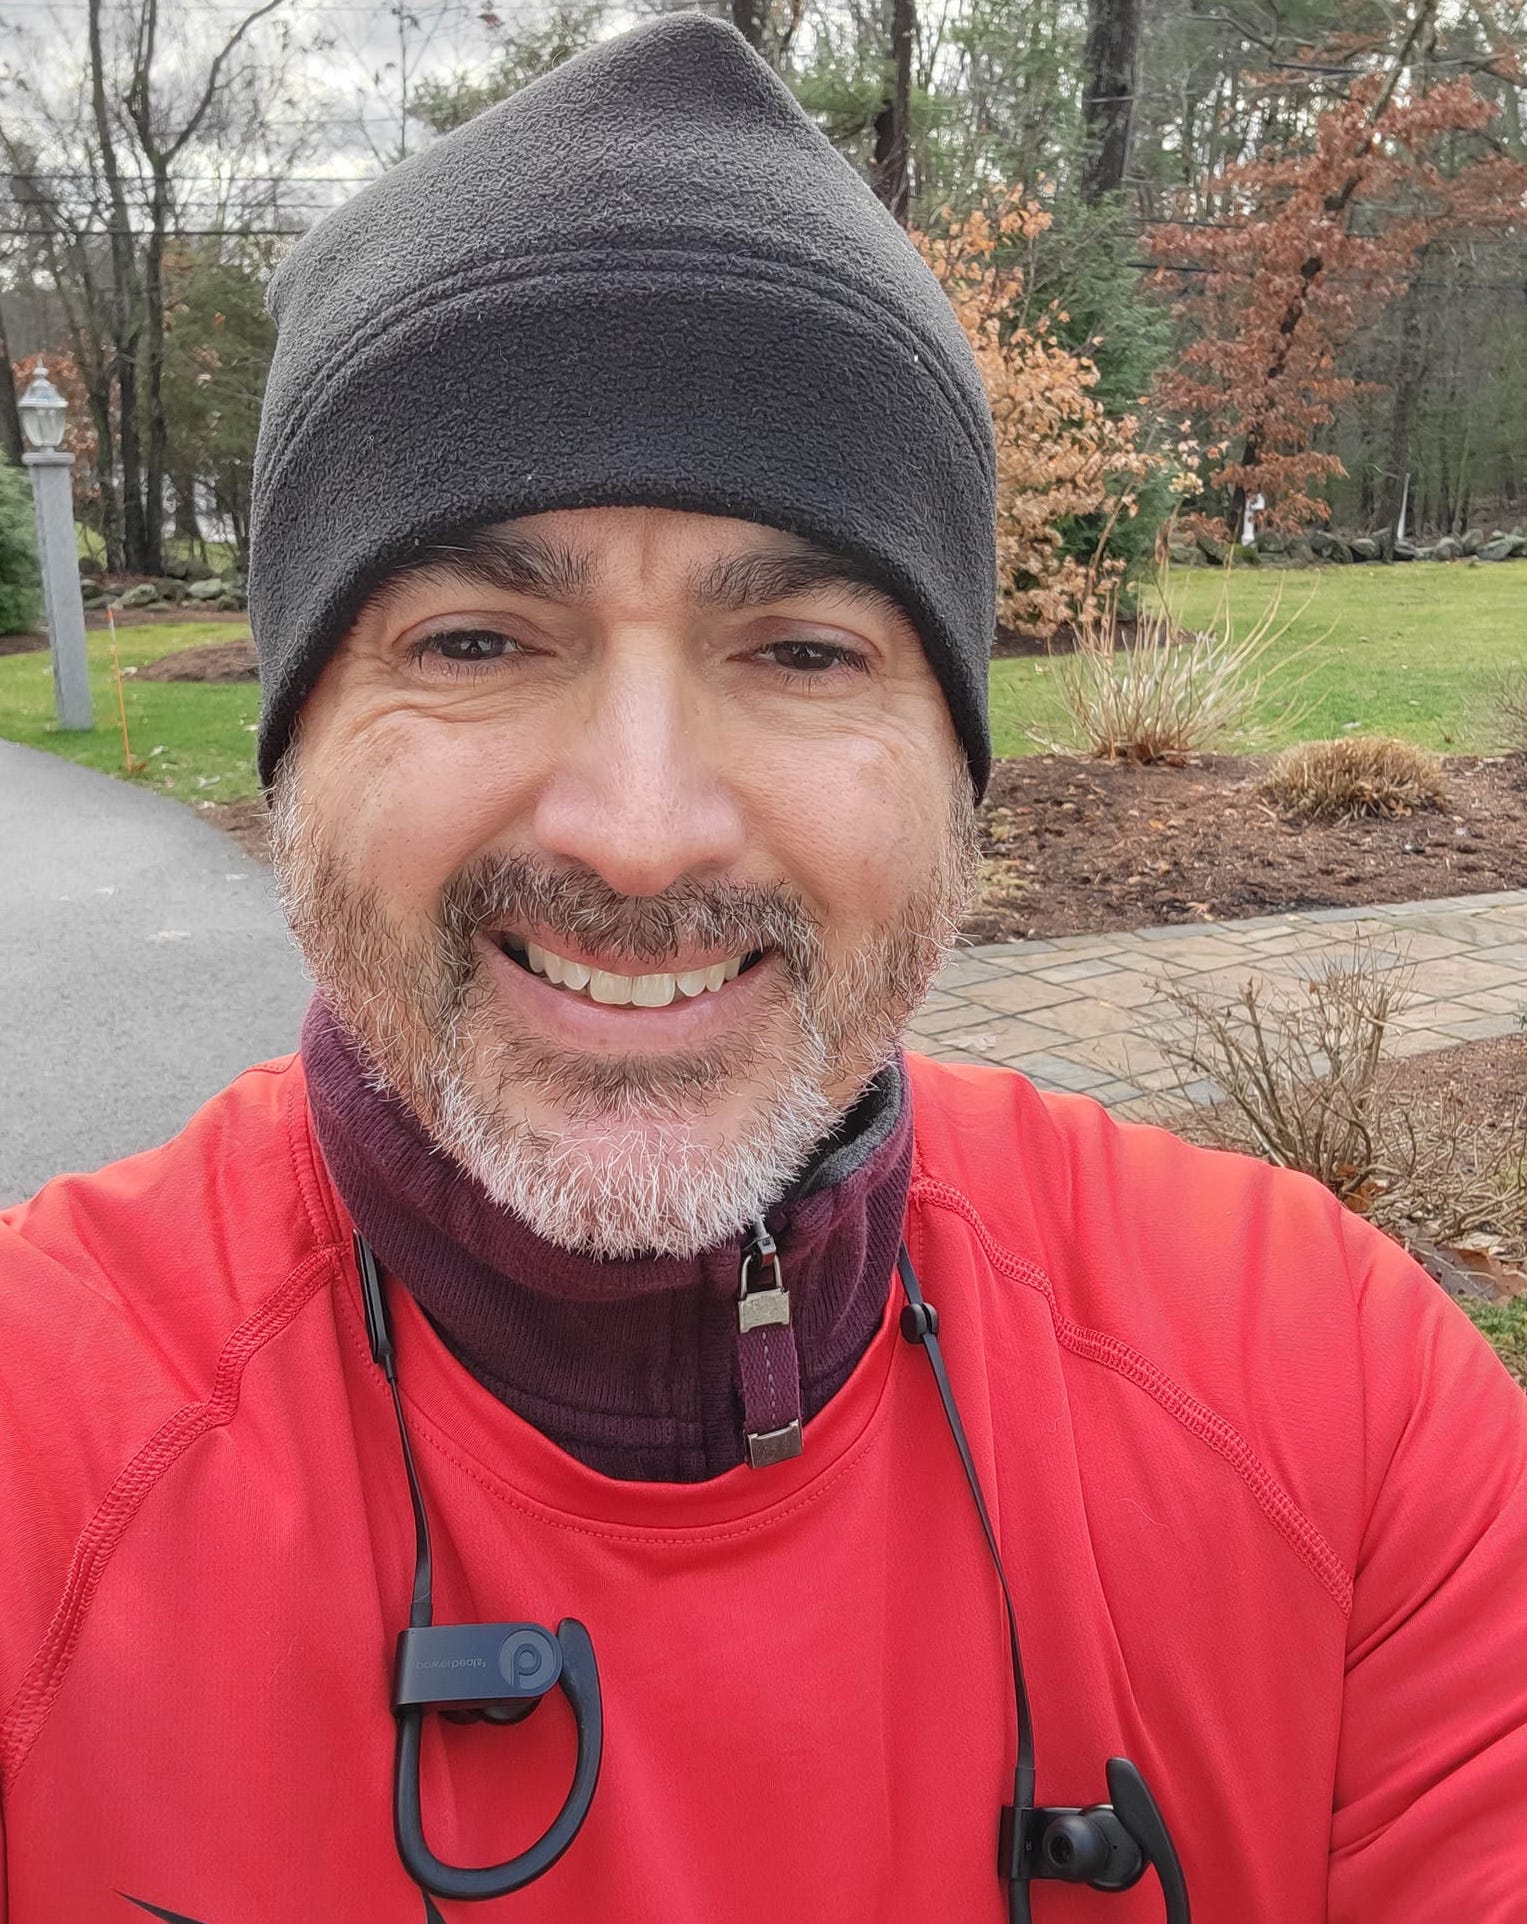 Gonzalez runs Boston Marathon to inspire generosity, determination